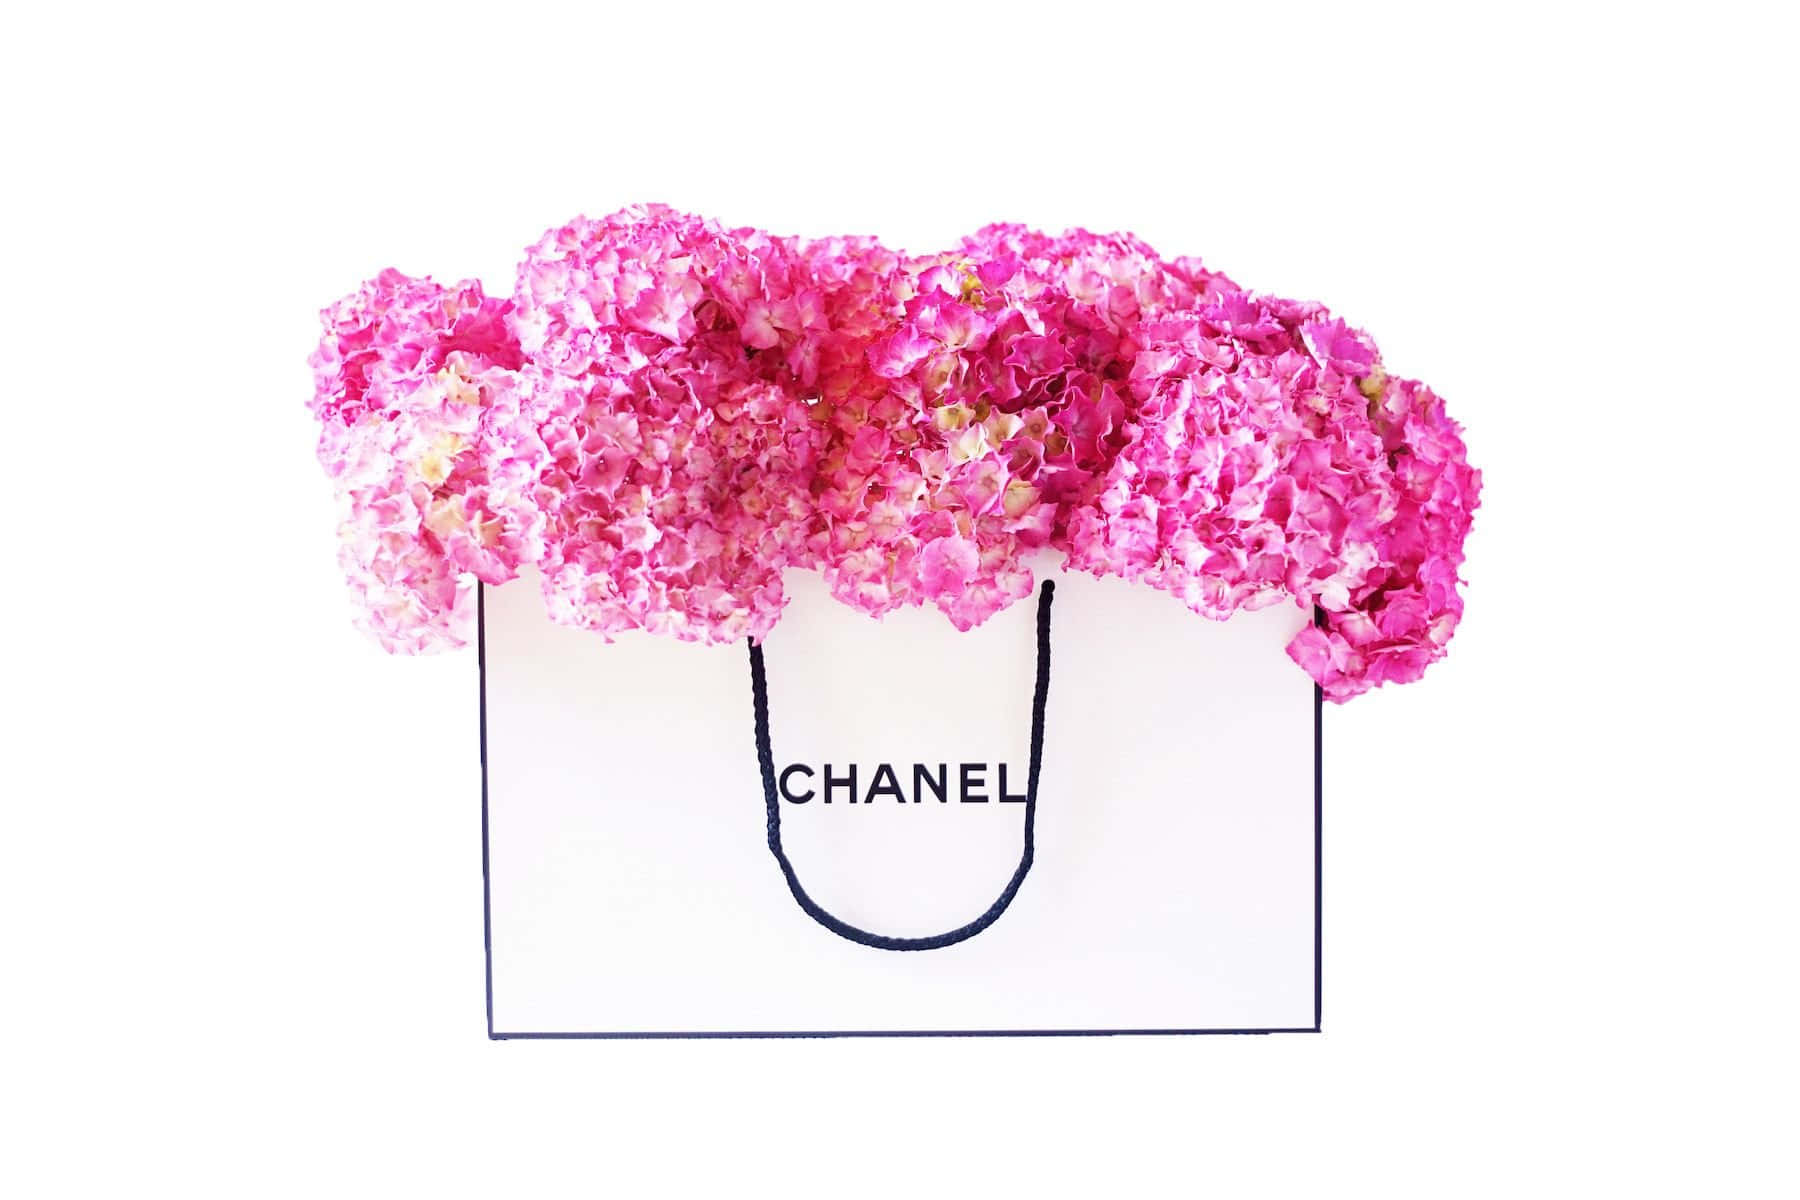 Luxury fashion house Chanel logo against a black background